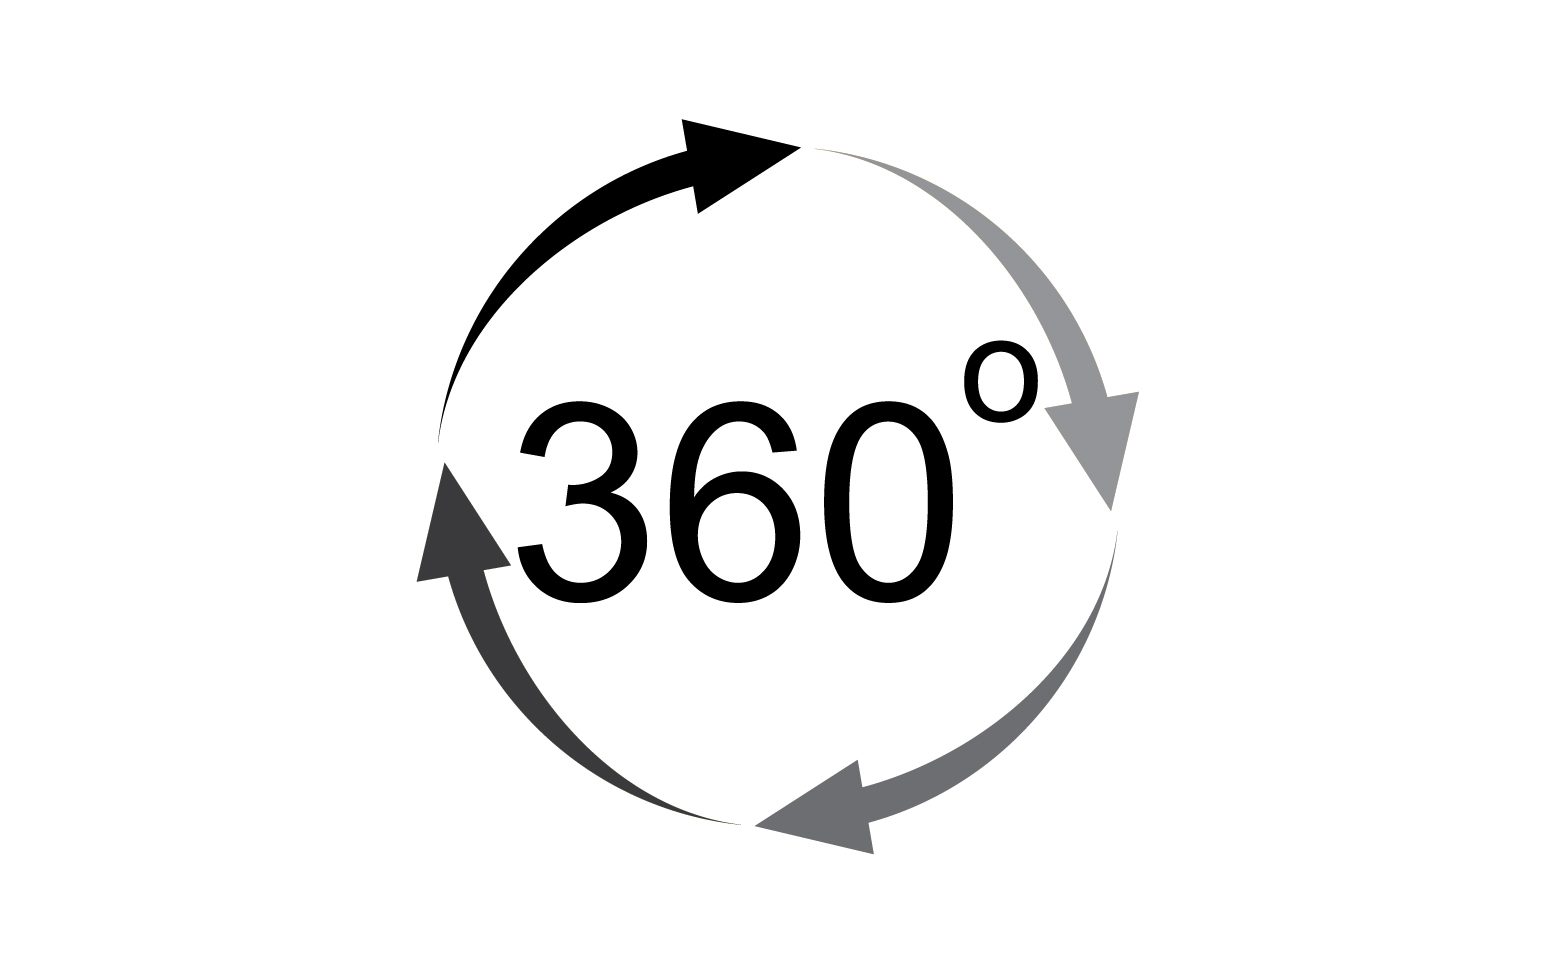 360 degree angle rotation icon symbol logo version v14